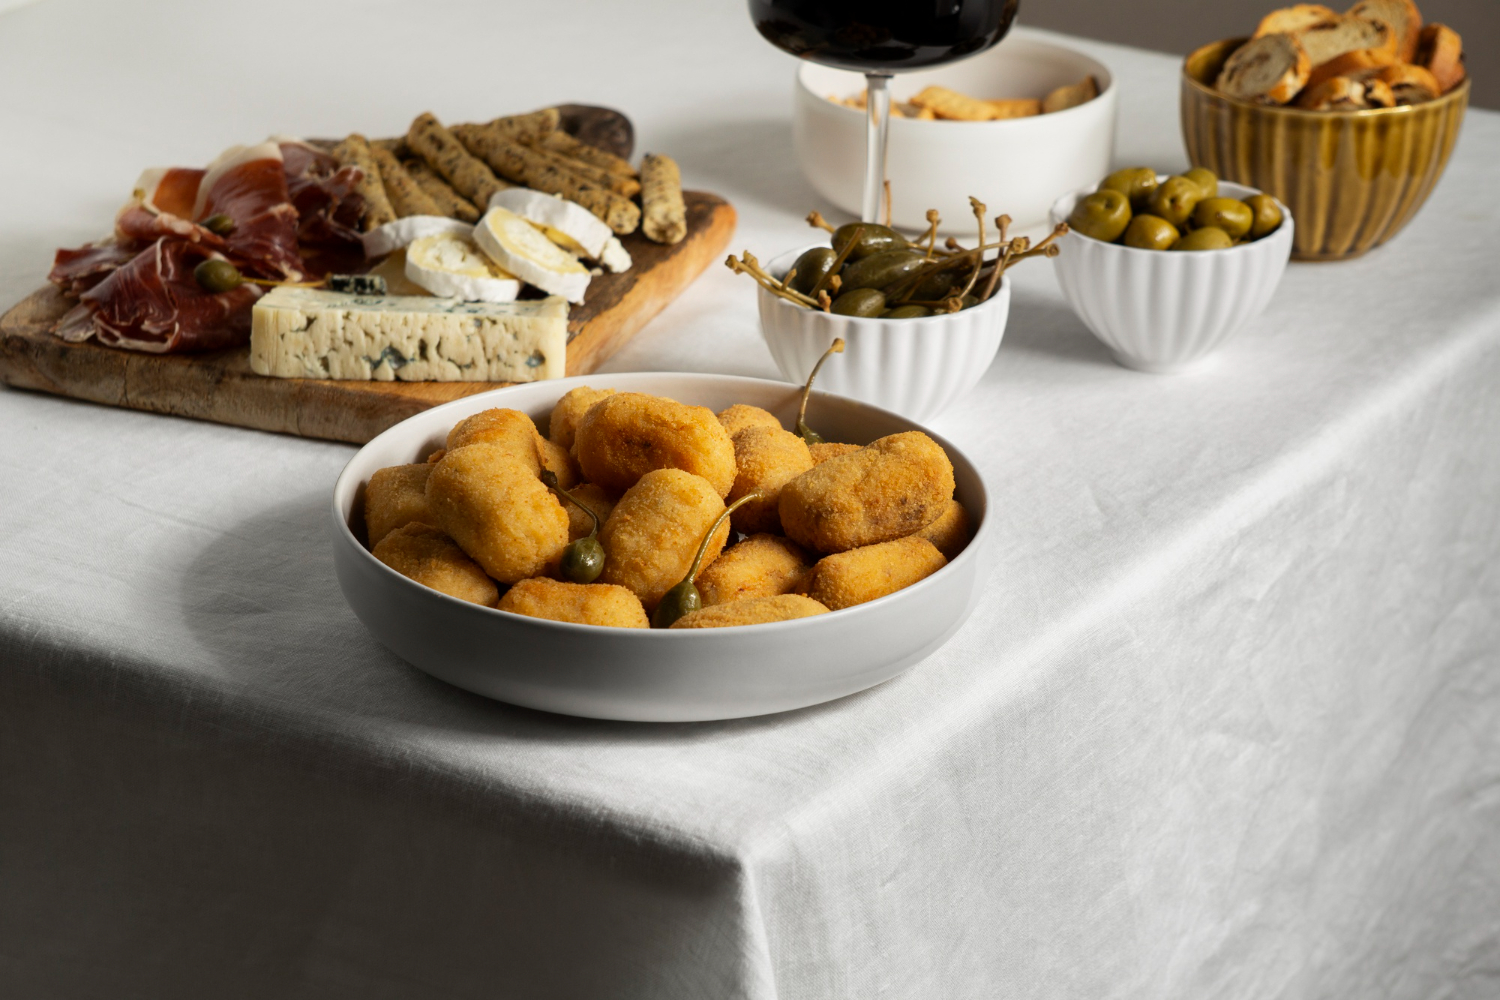 The snacks on a table | Source: Freepik